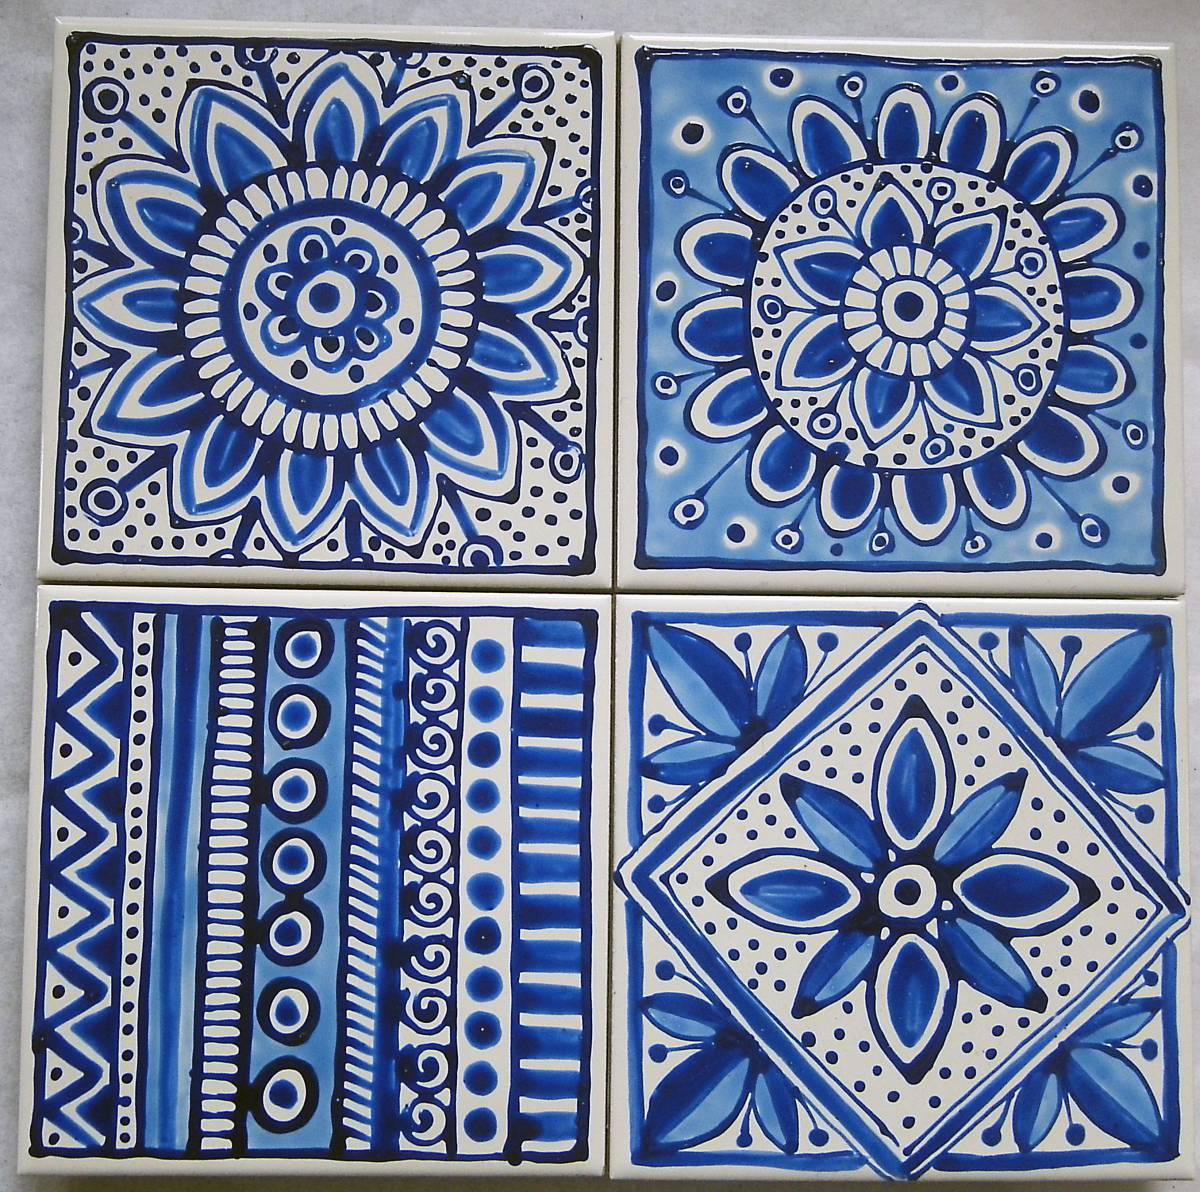 Careful ceramic tiles coloring